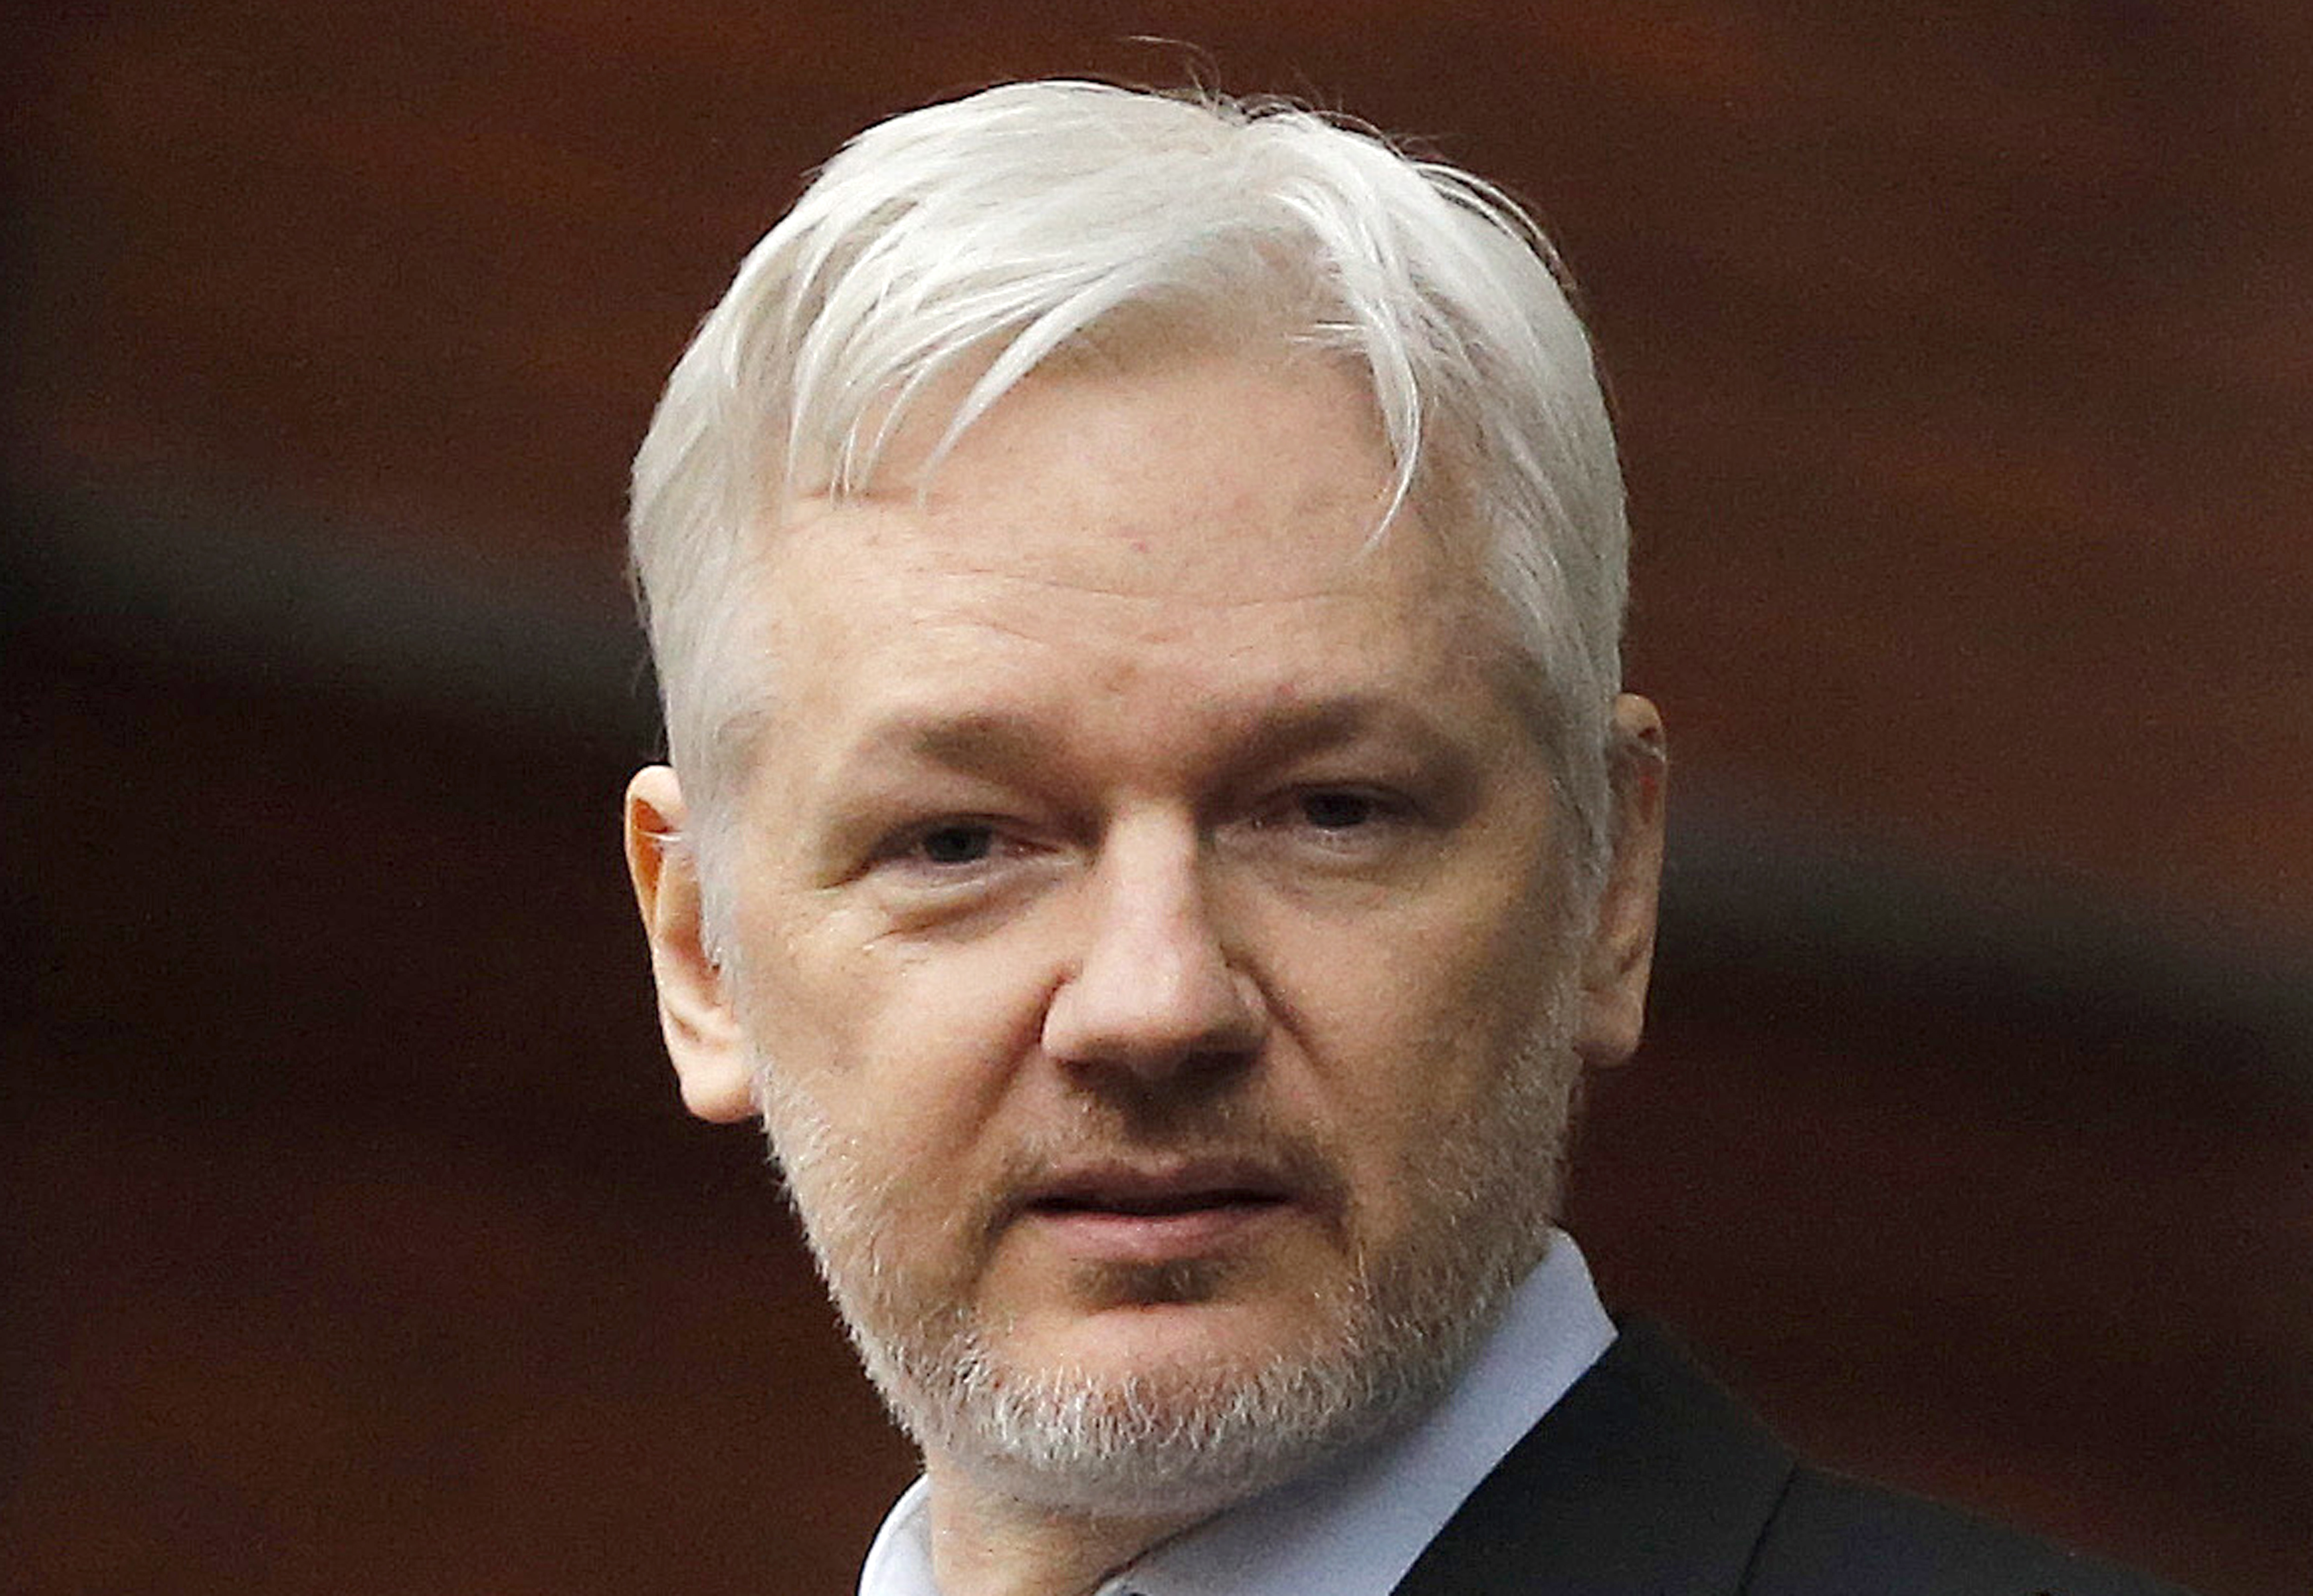 Assange no es ningún ejemplo "de verdad e integridad", responde CIA